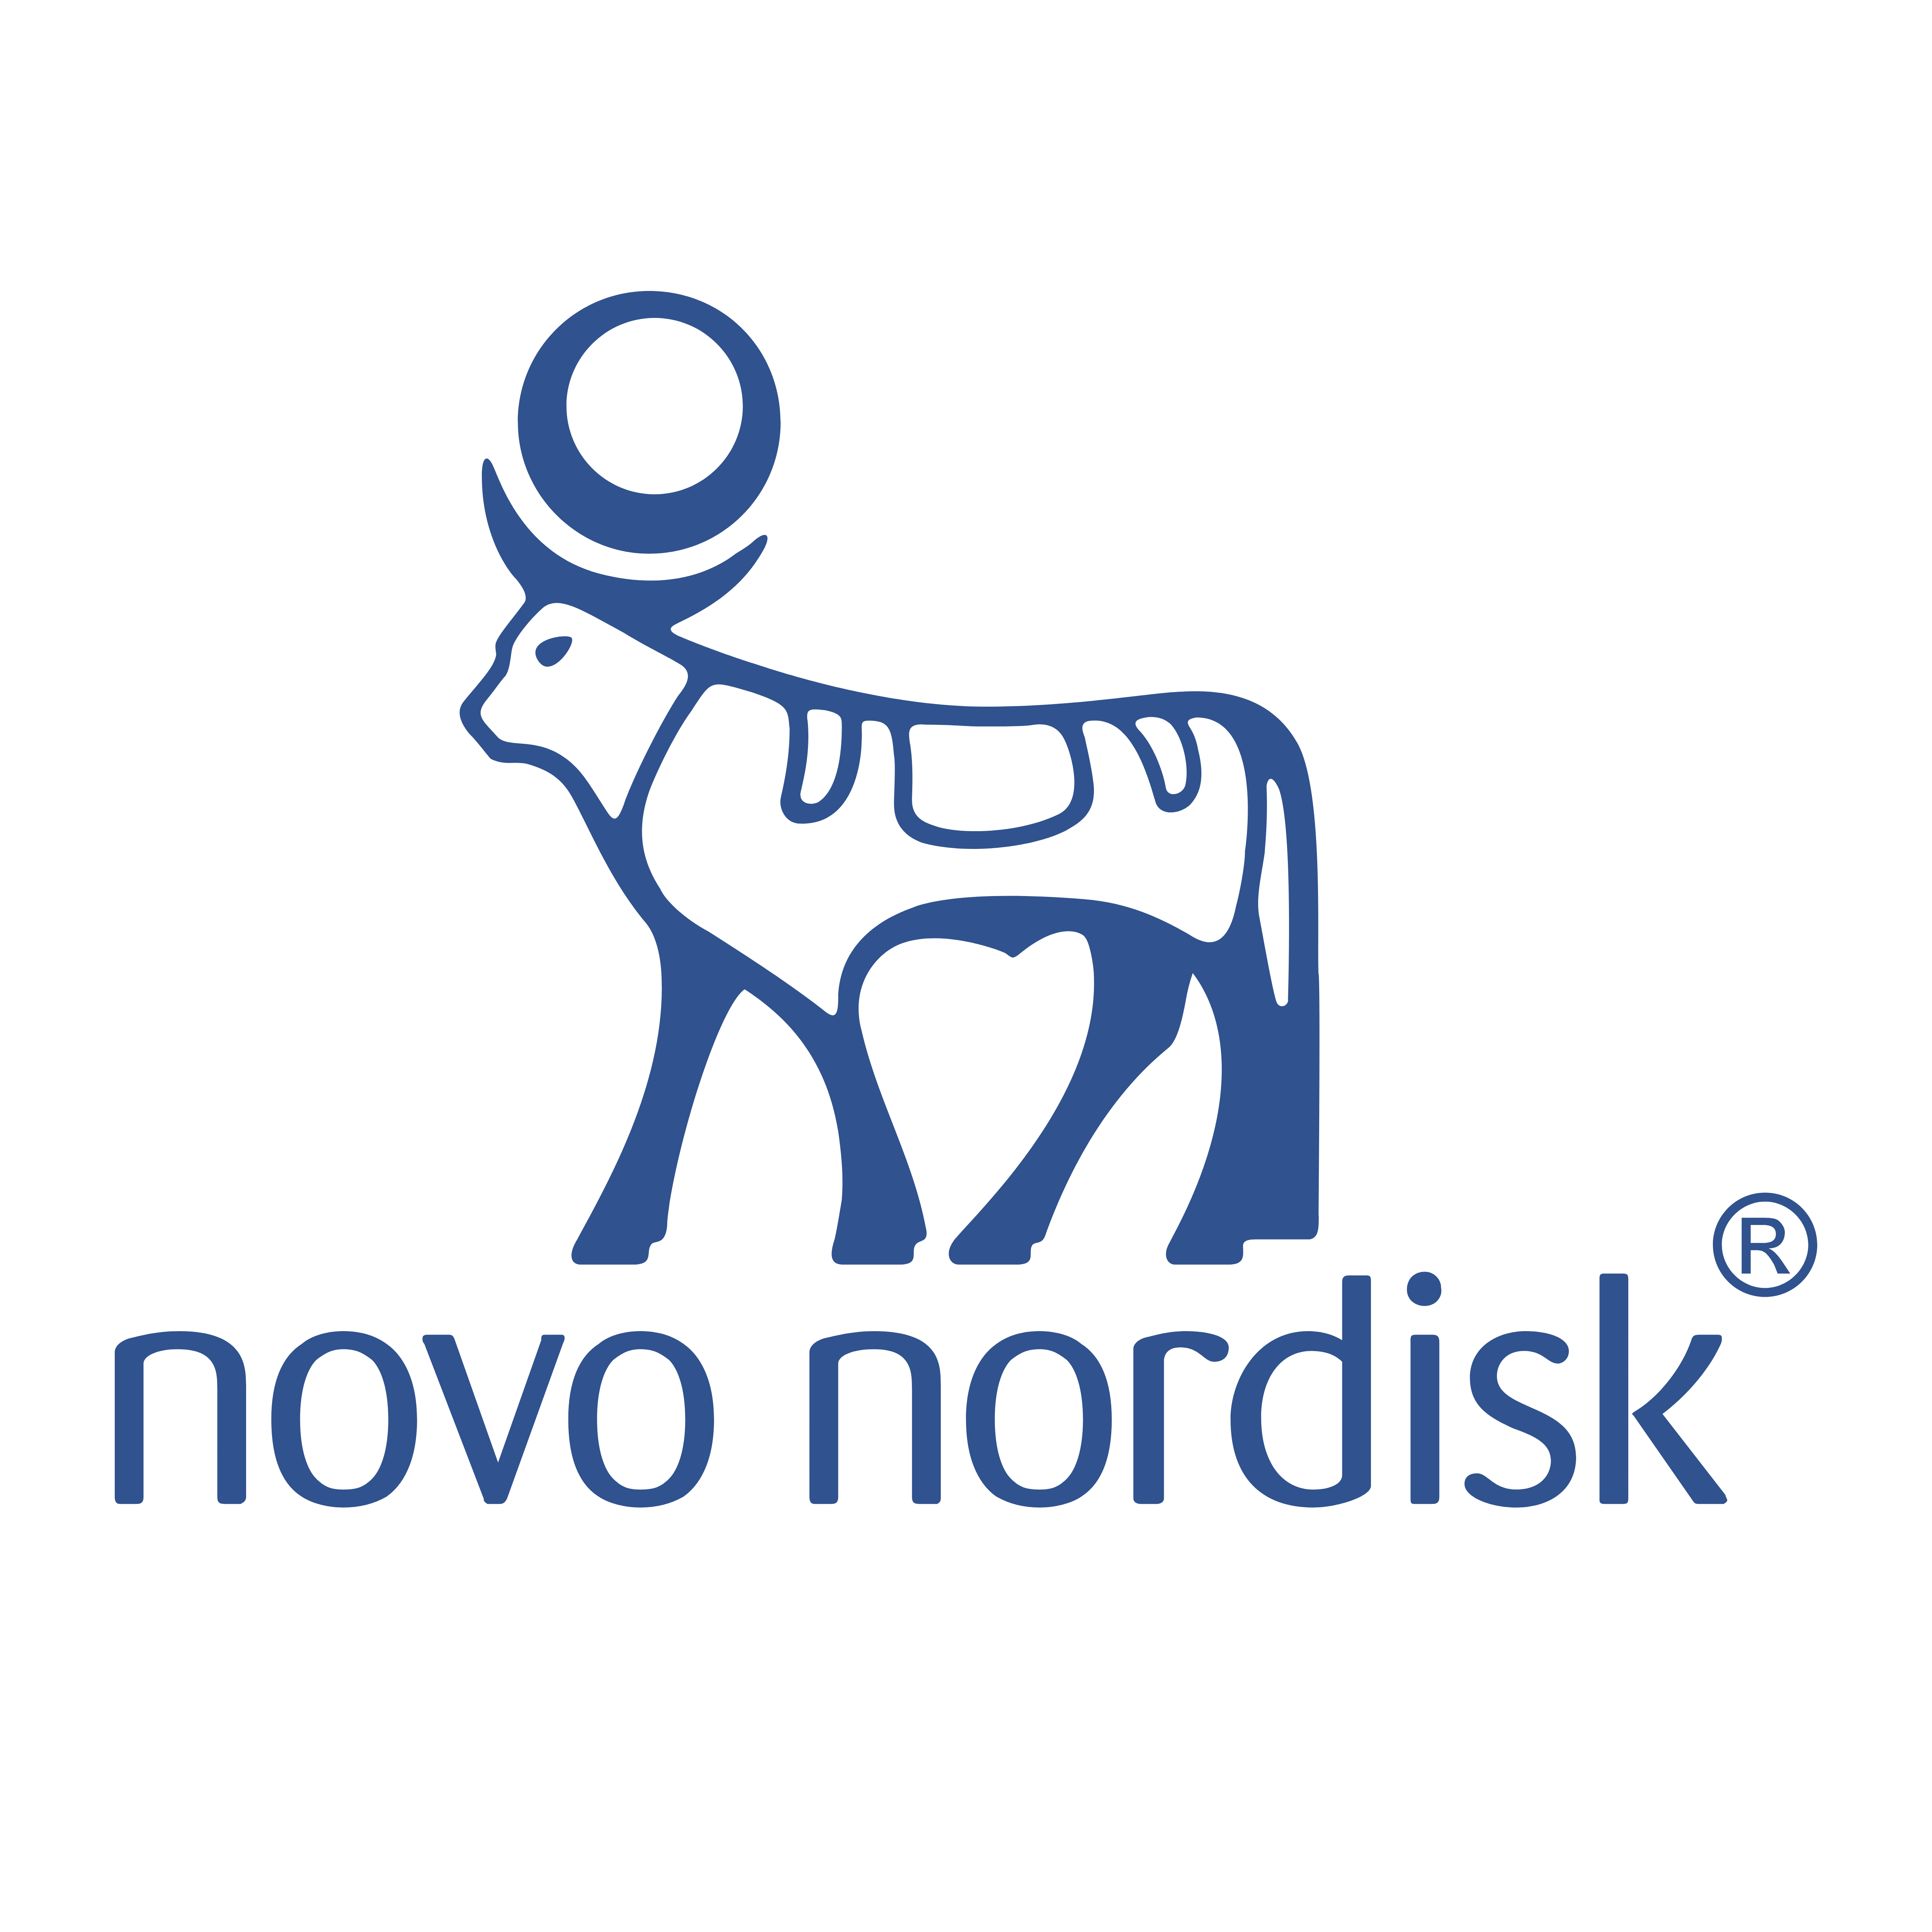 Novo Nordisk - Logos Download